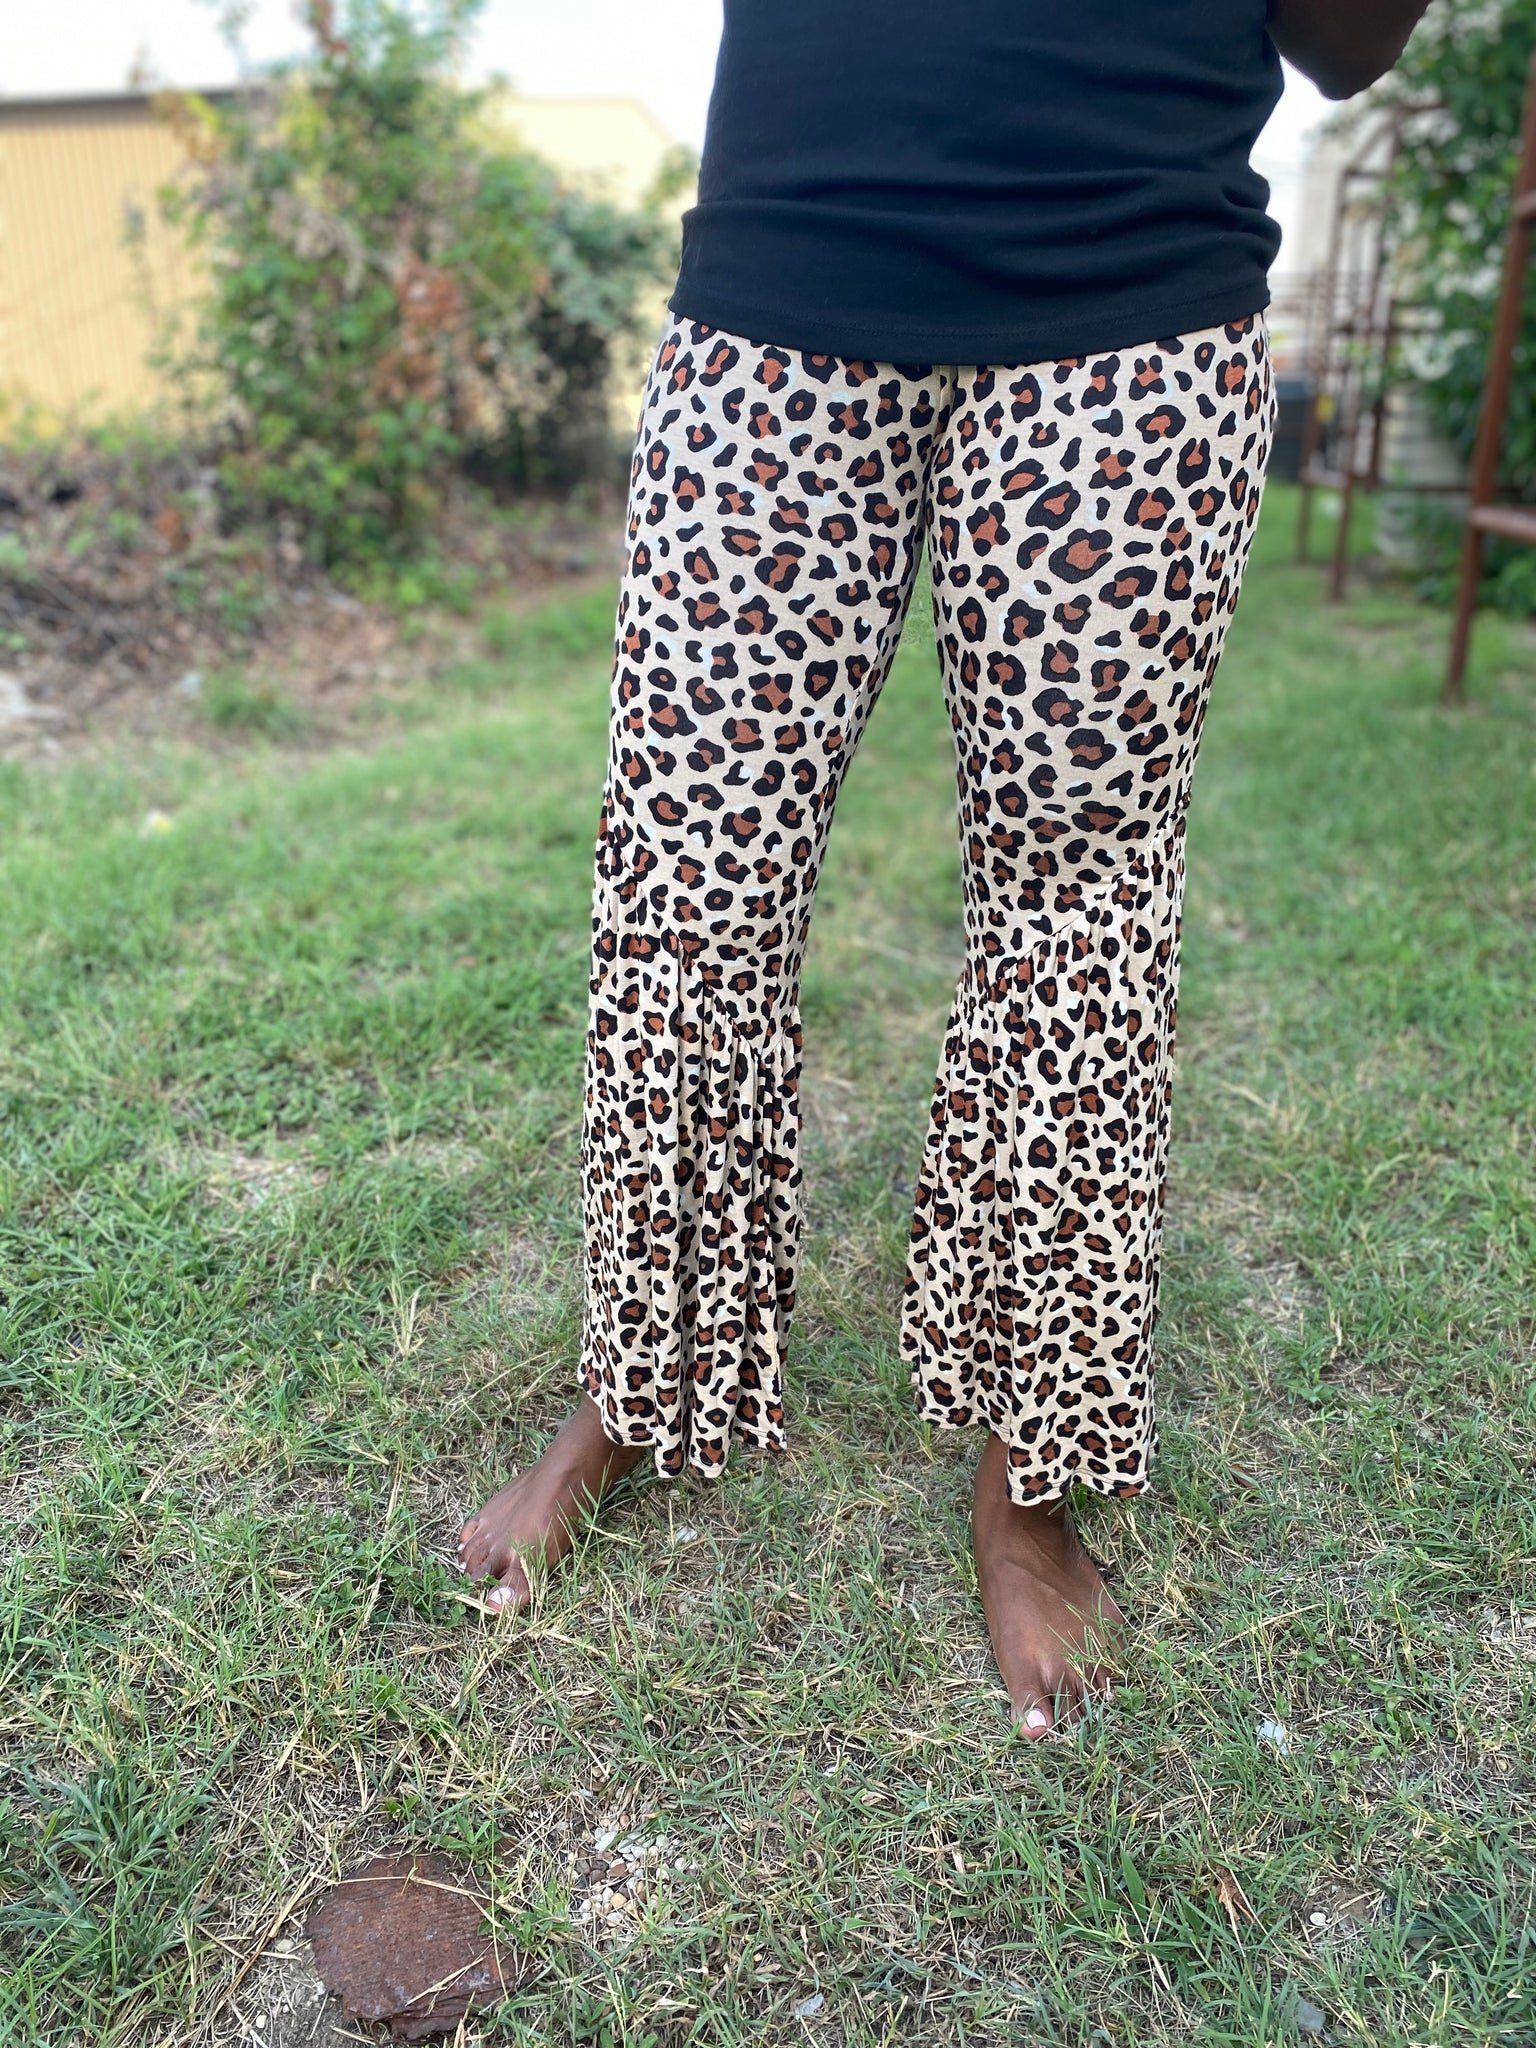 Leopard ruffle bottoms